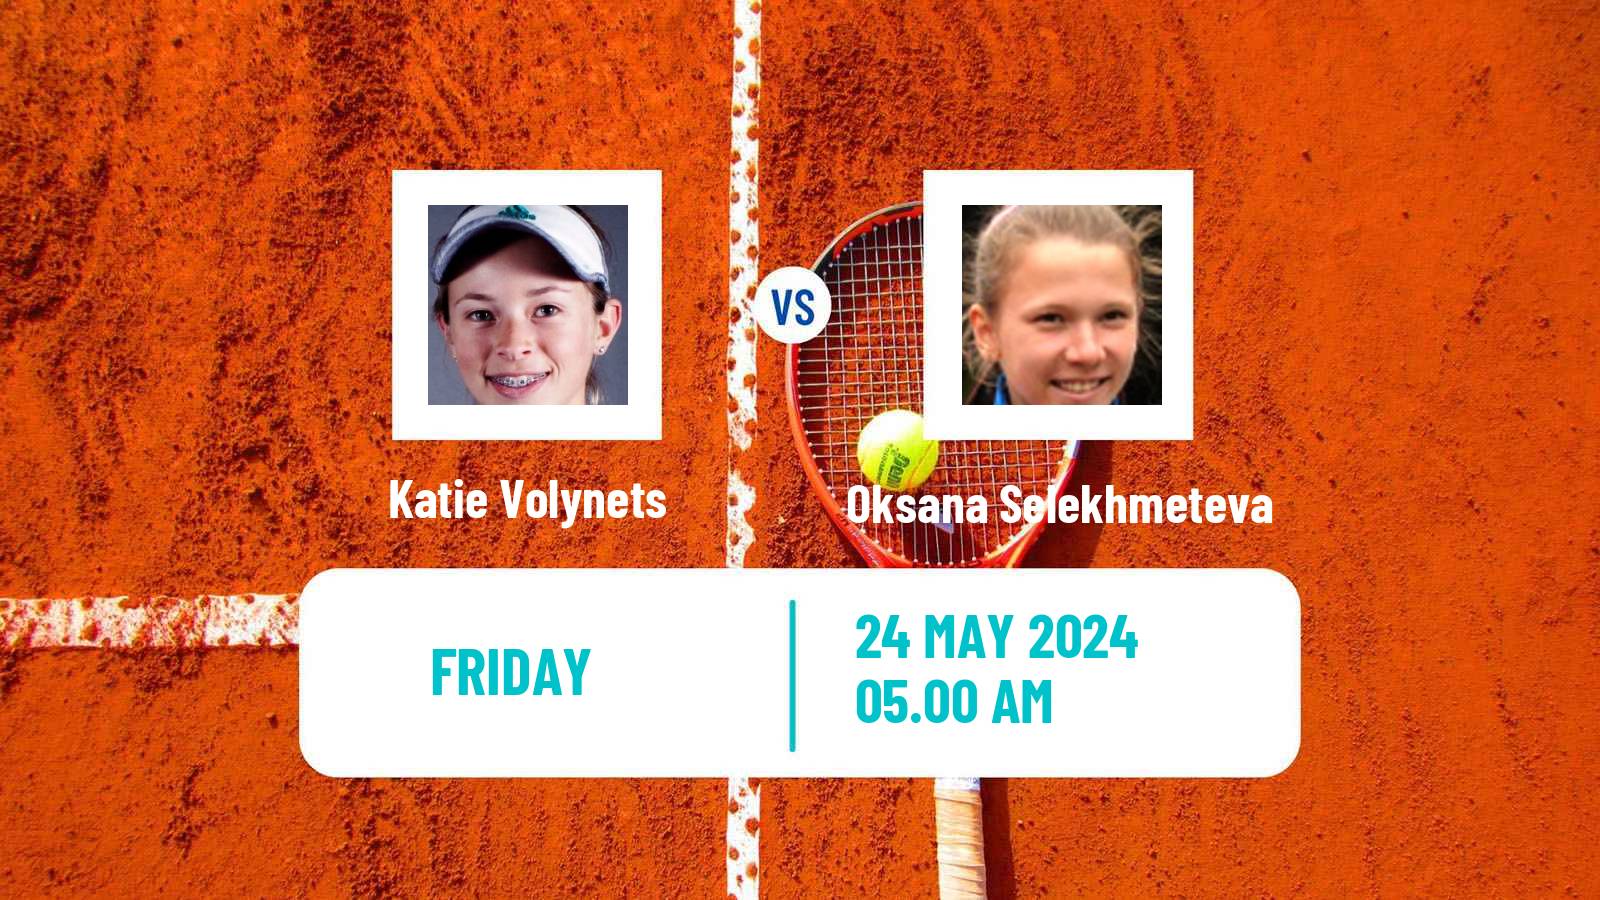 Tennis WTA Roland Garros Katie Volynets - Oksana Selekhmeteva